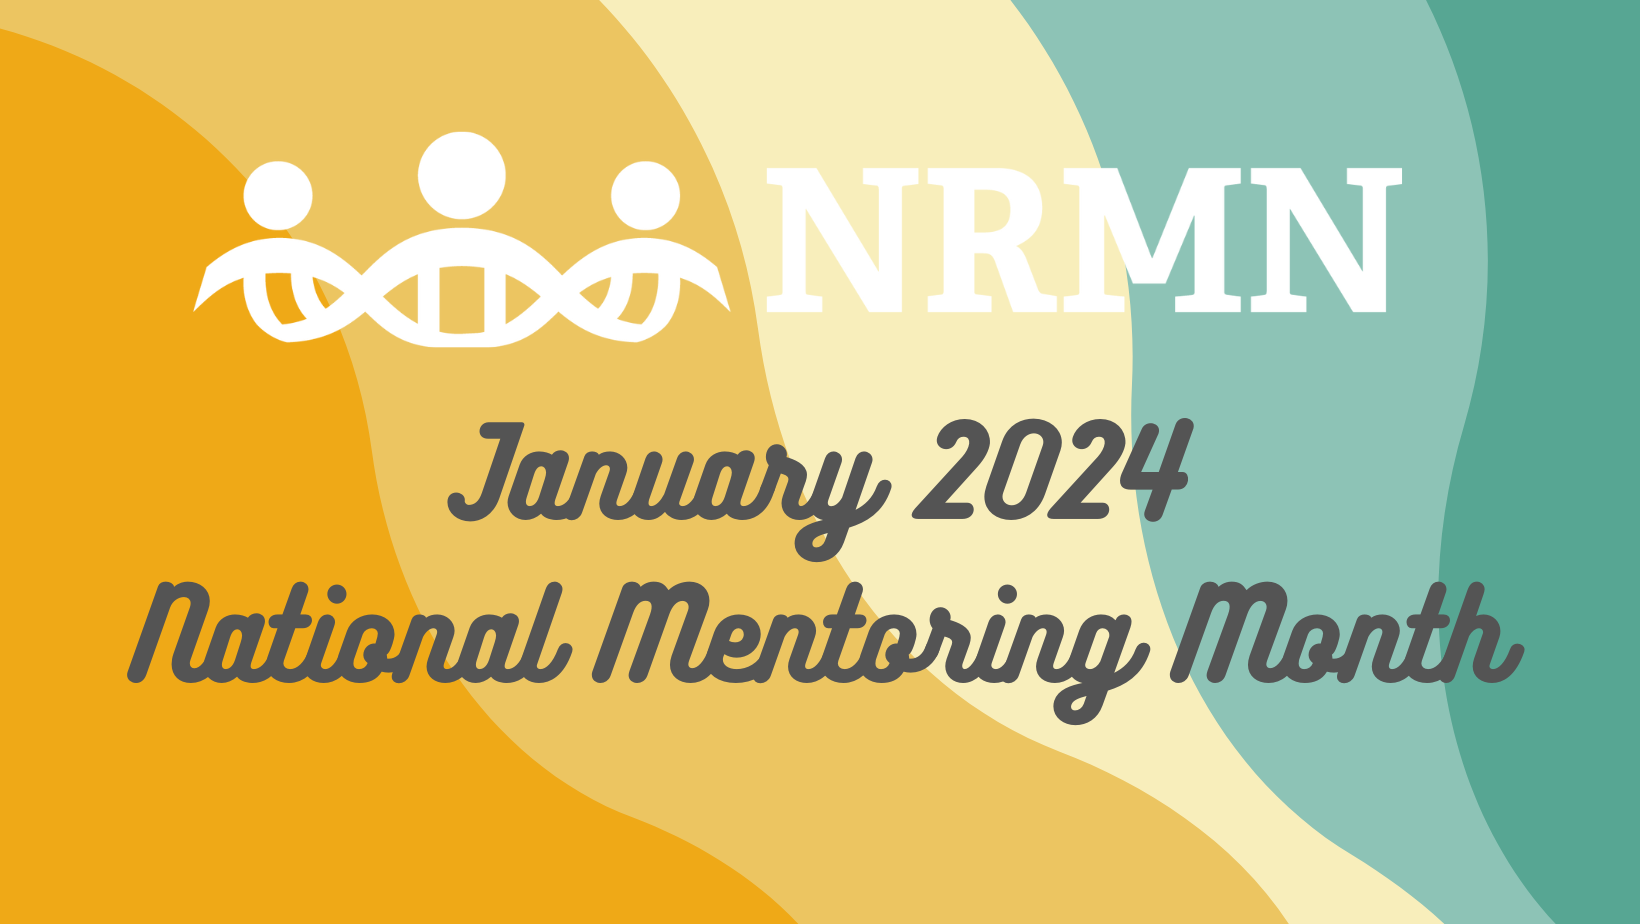 stylized header of NRMN logo celebrating January 2024 National Mentoring Month